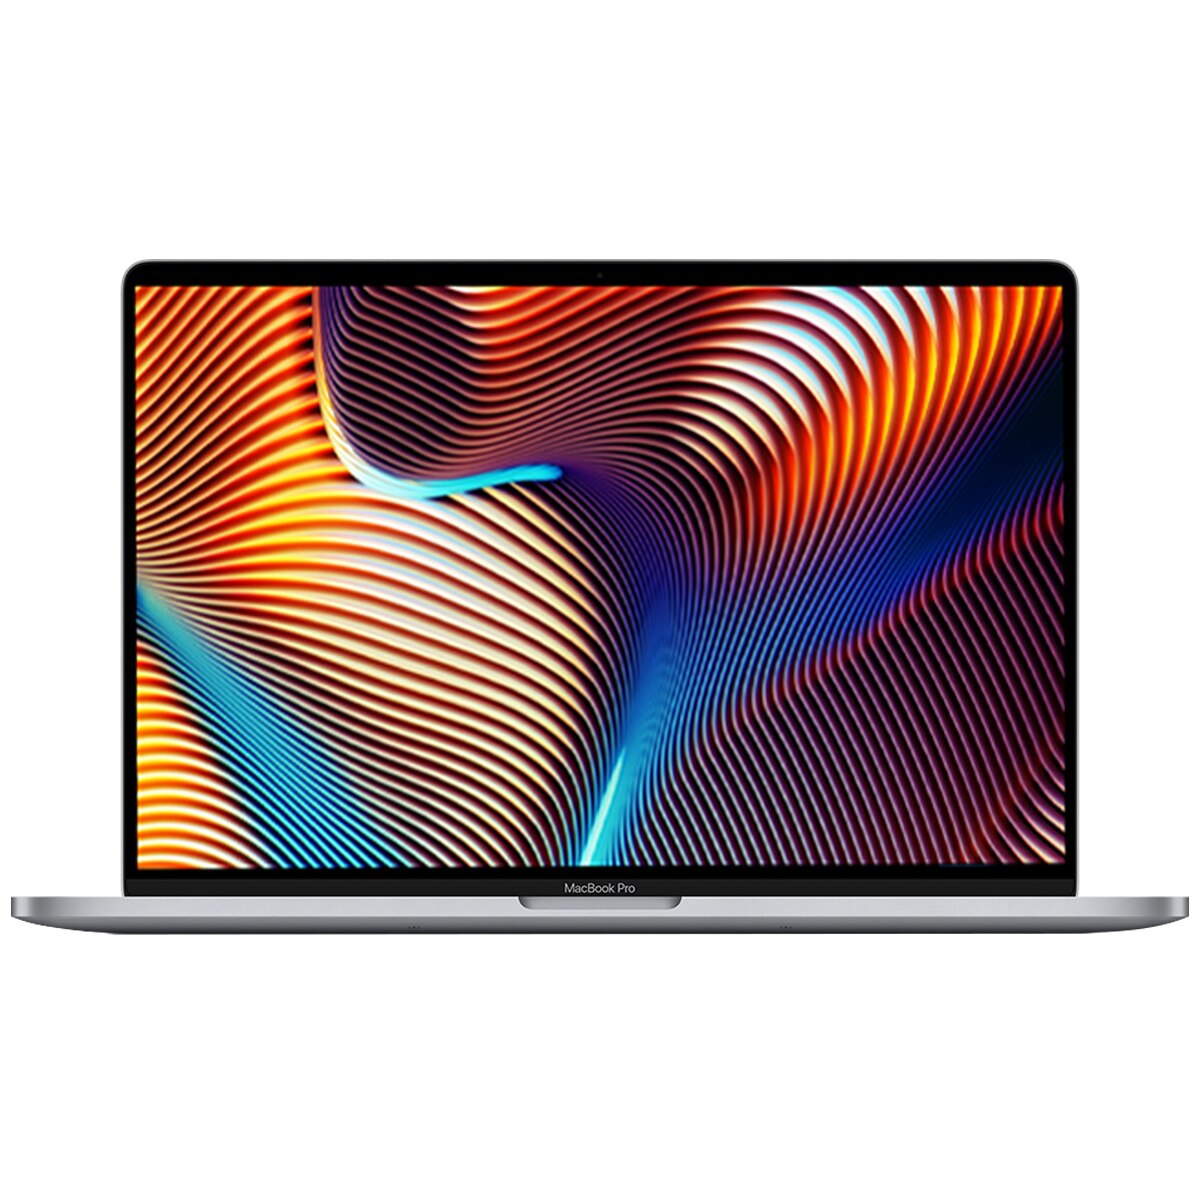 MacBook Pro 13 Inch 1.4GHz Quad-Core 8th-Generation Intel Core 